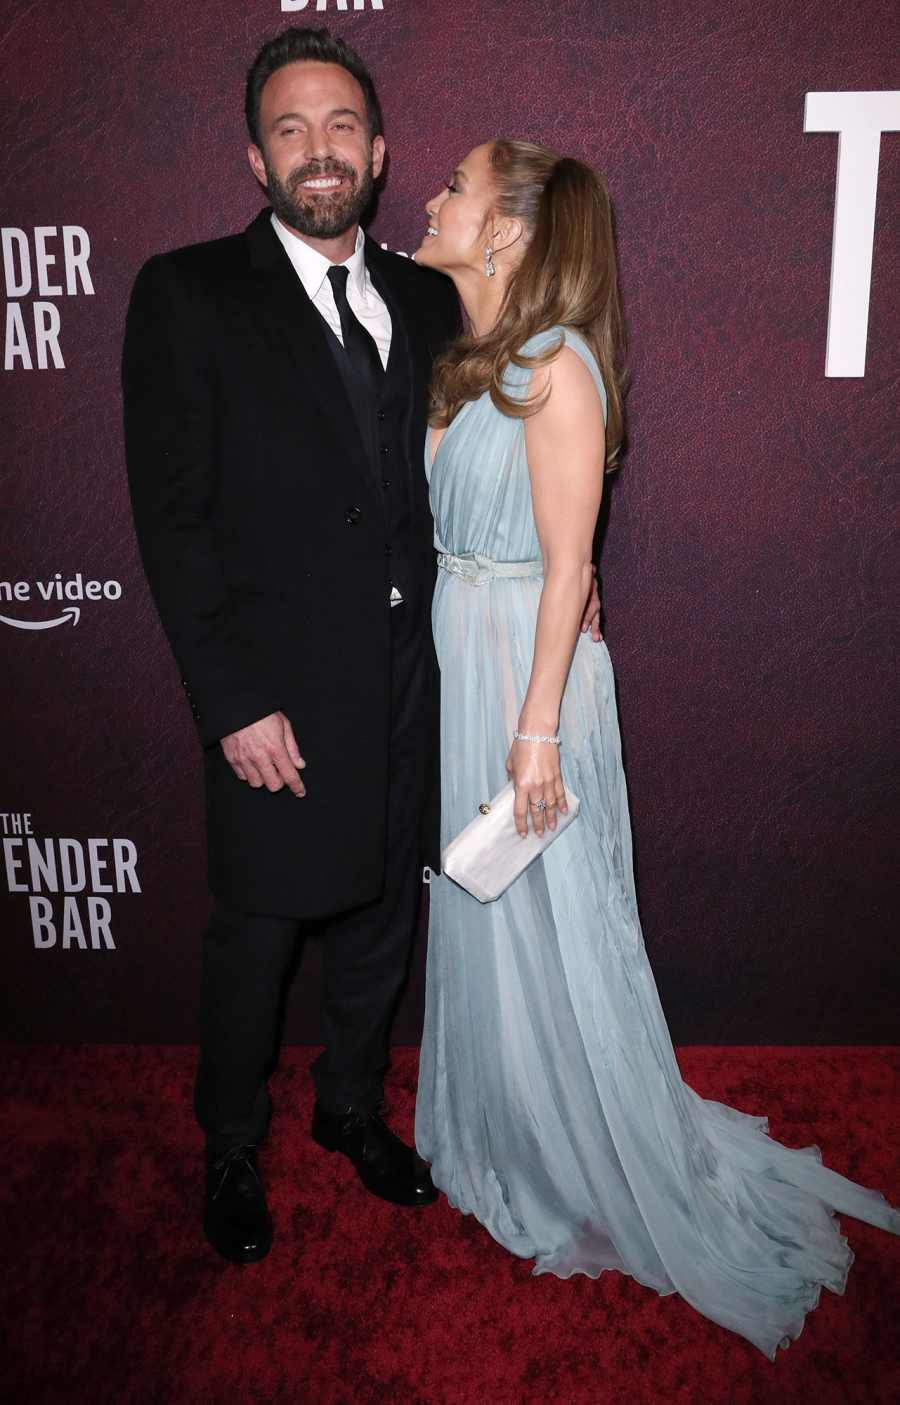 Ben Affleck and Jennifer Lopez Look So in Love Tender Bar Premiere Red Carpet 03